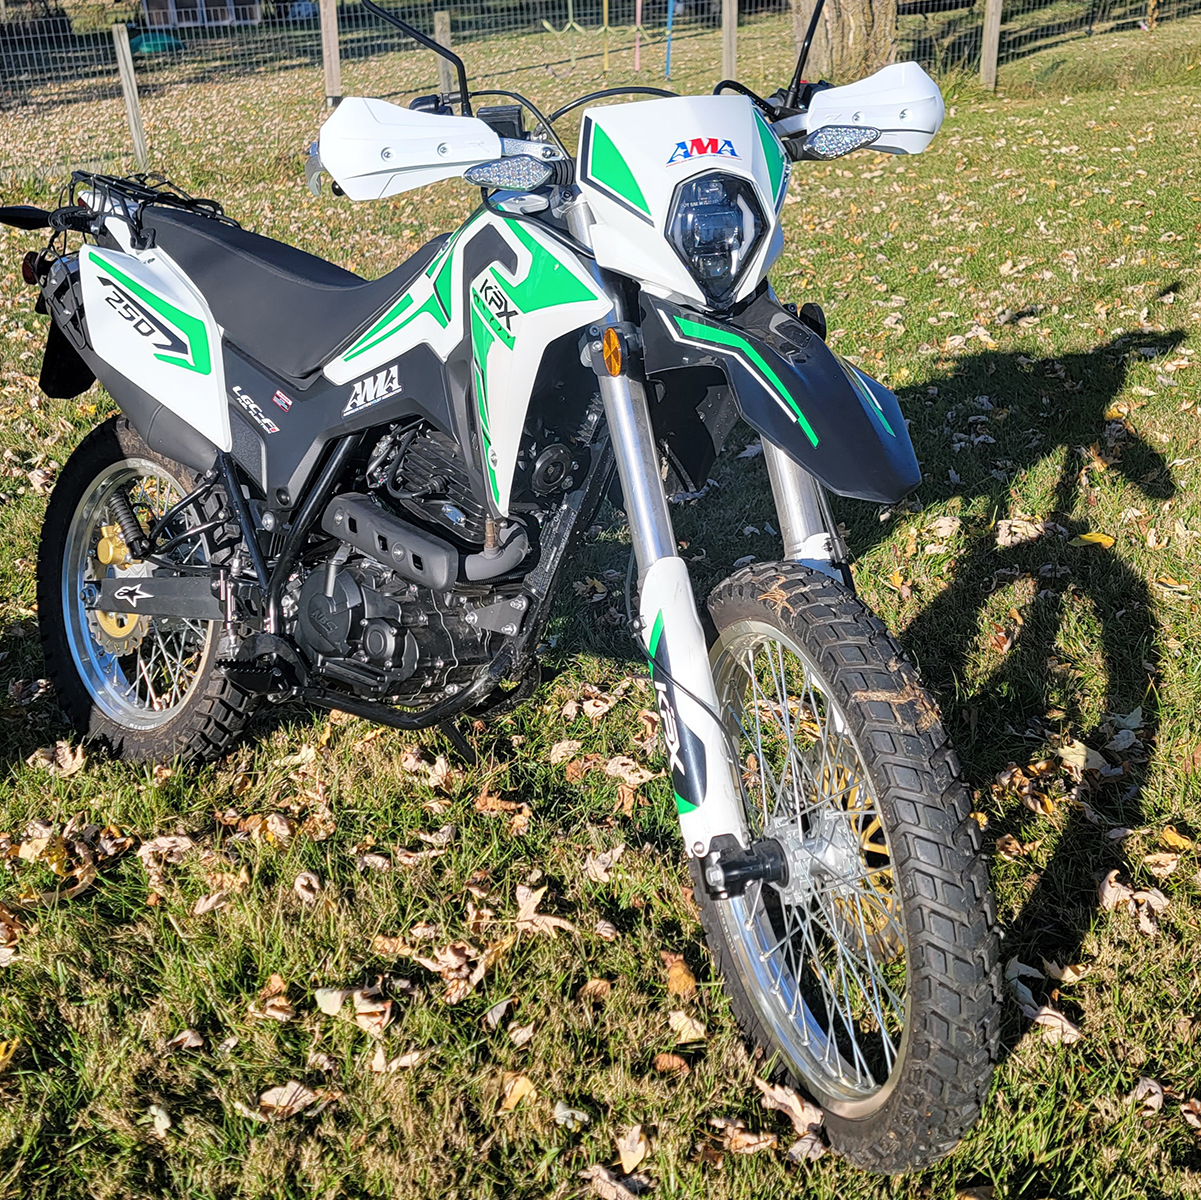 AMA Decal shown on a 250 dirt bike